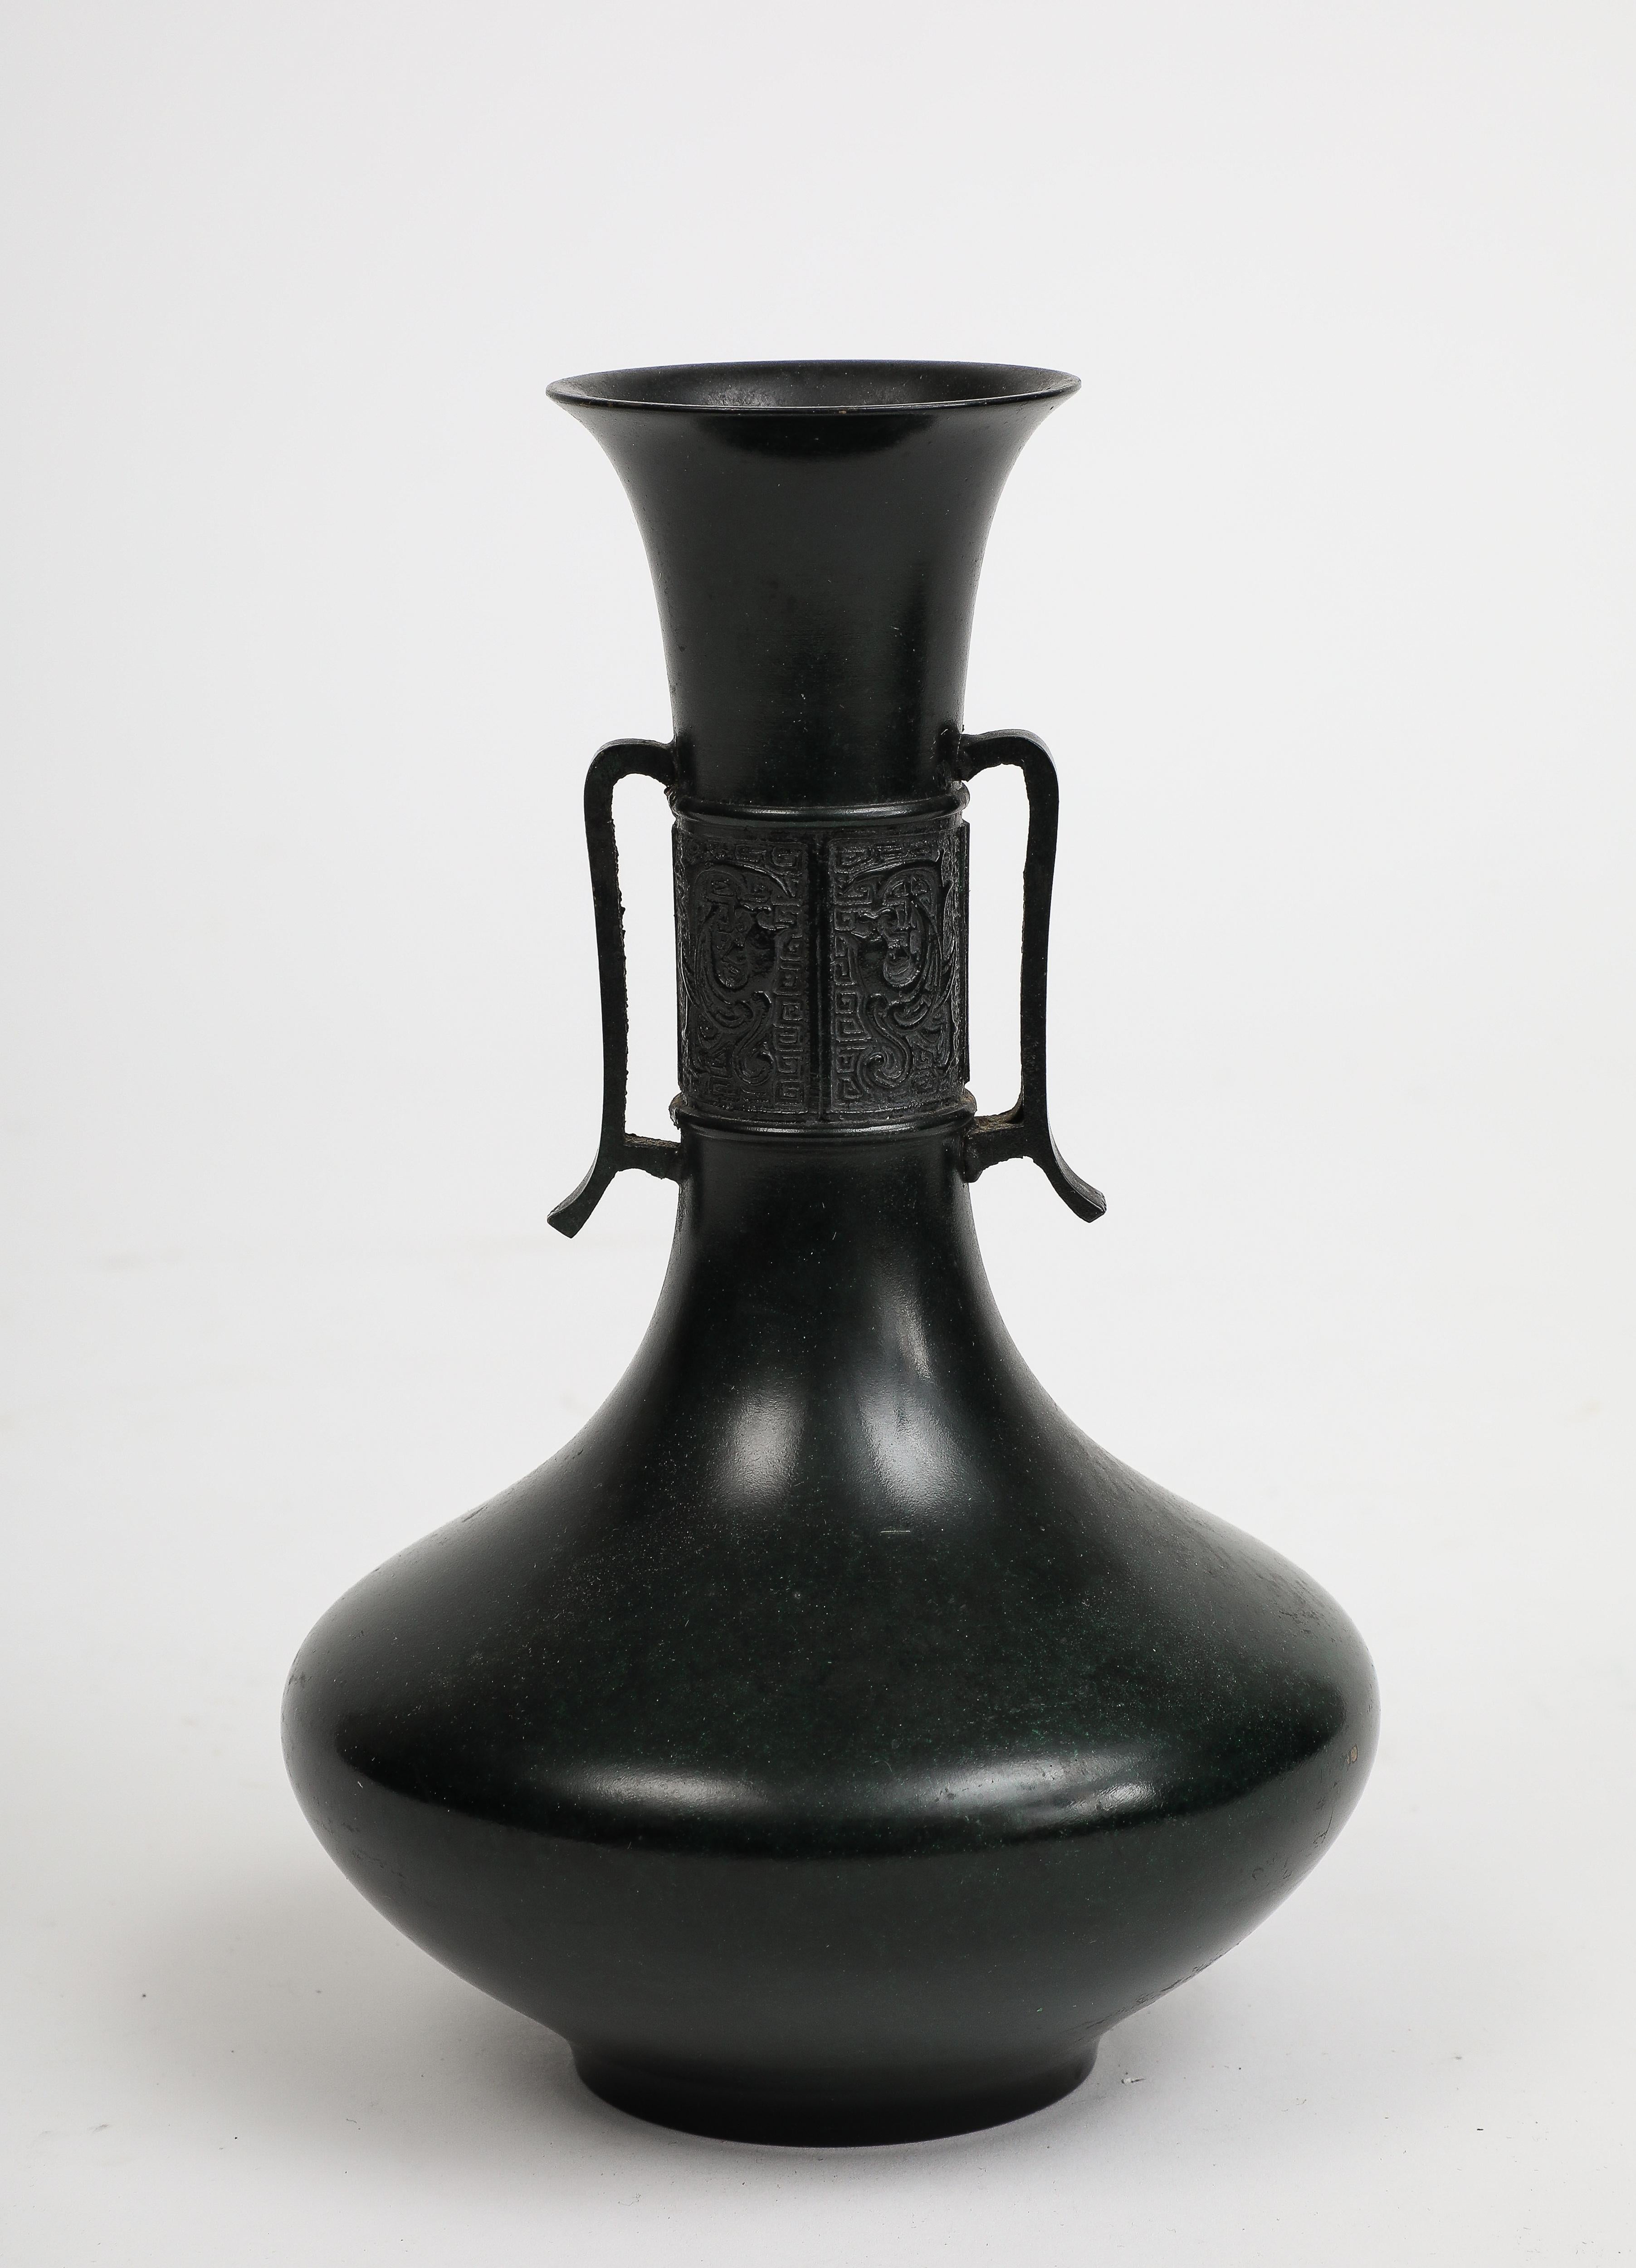 20th century blackened bronze Japanese vase, with slim handles and raised bronze casting on the neck. 